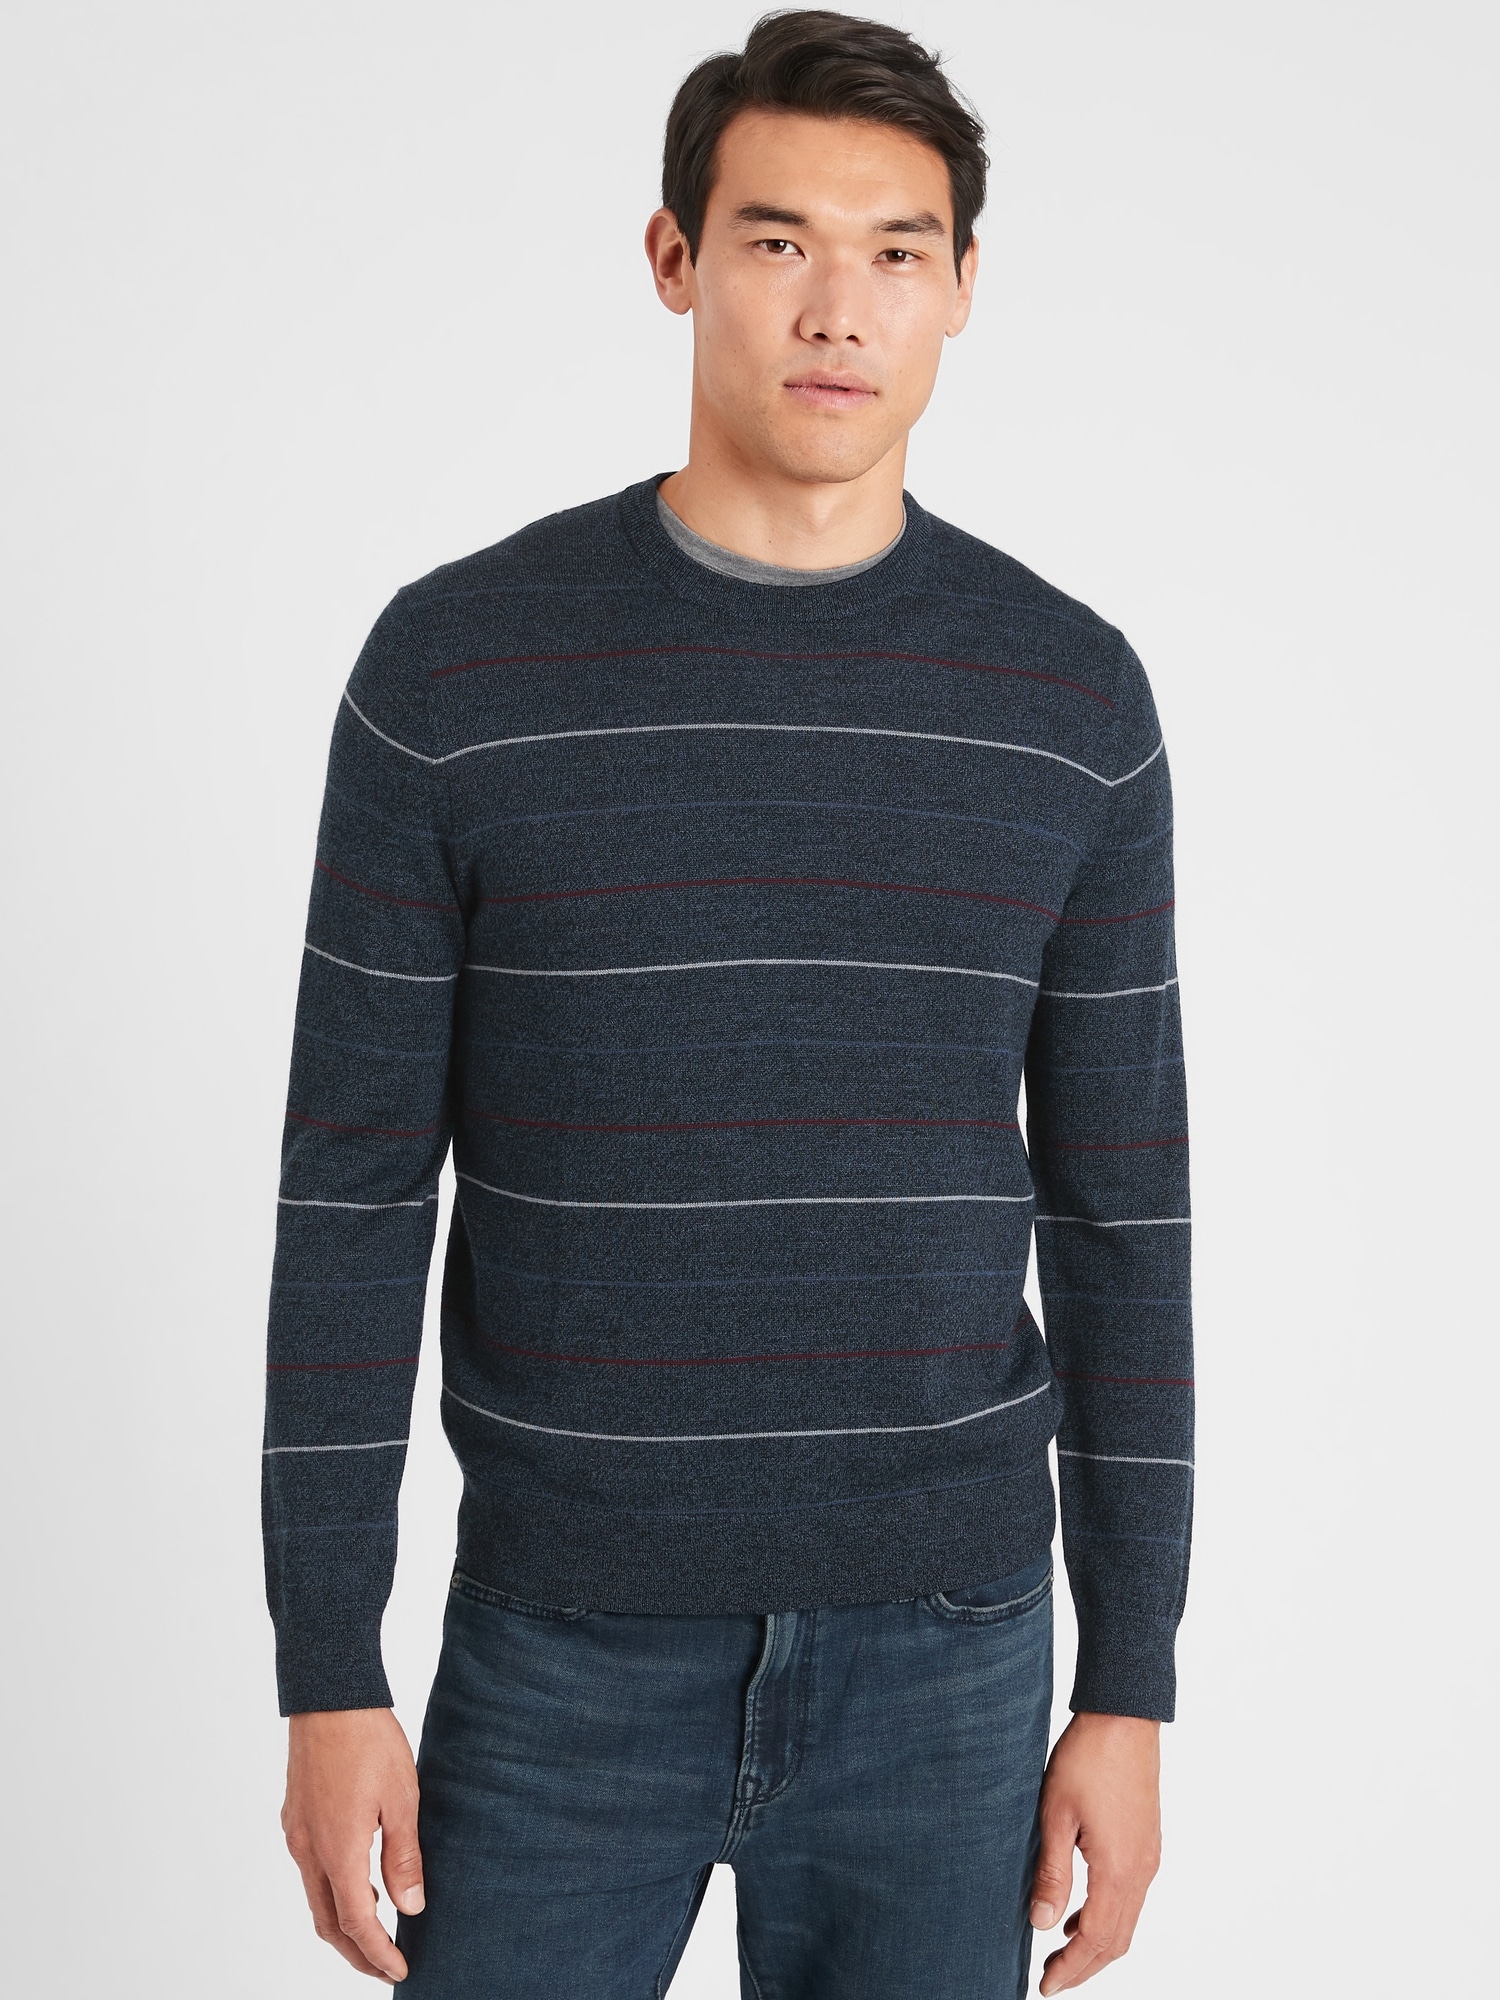 Washable Merino Wool Striped Crew-Neck Sweater